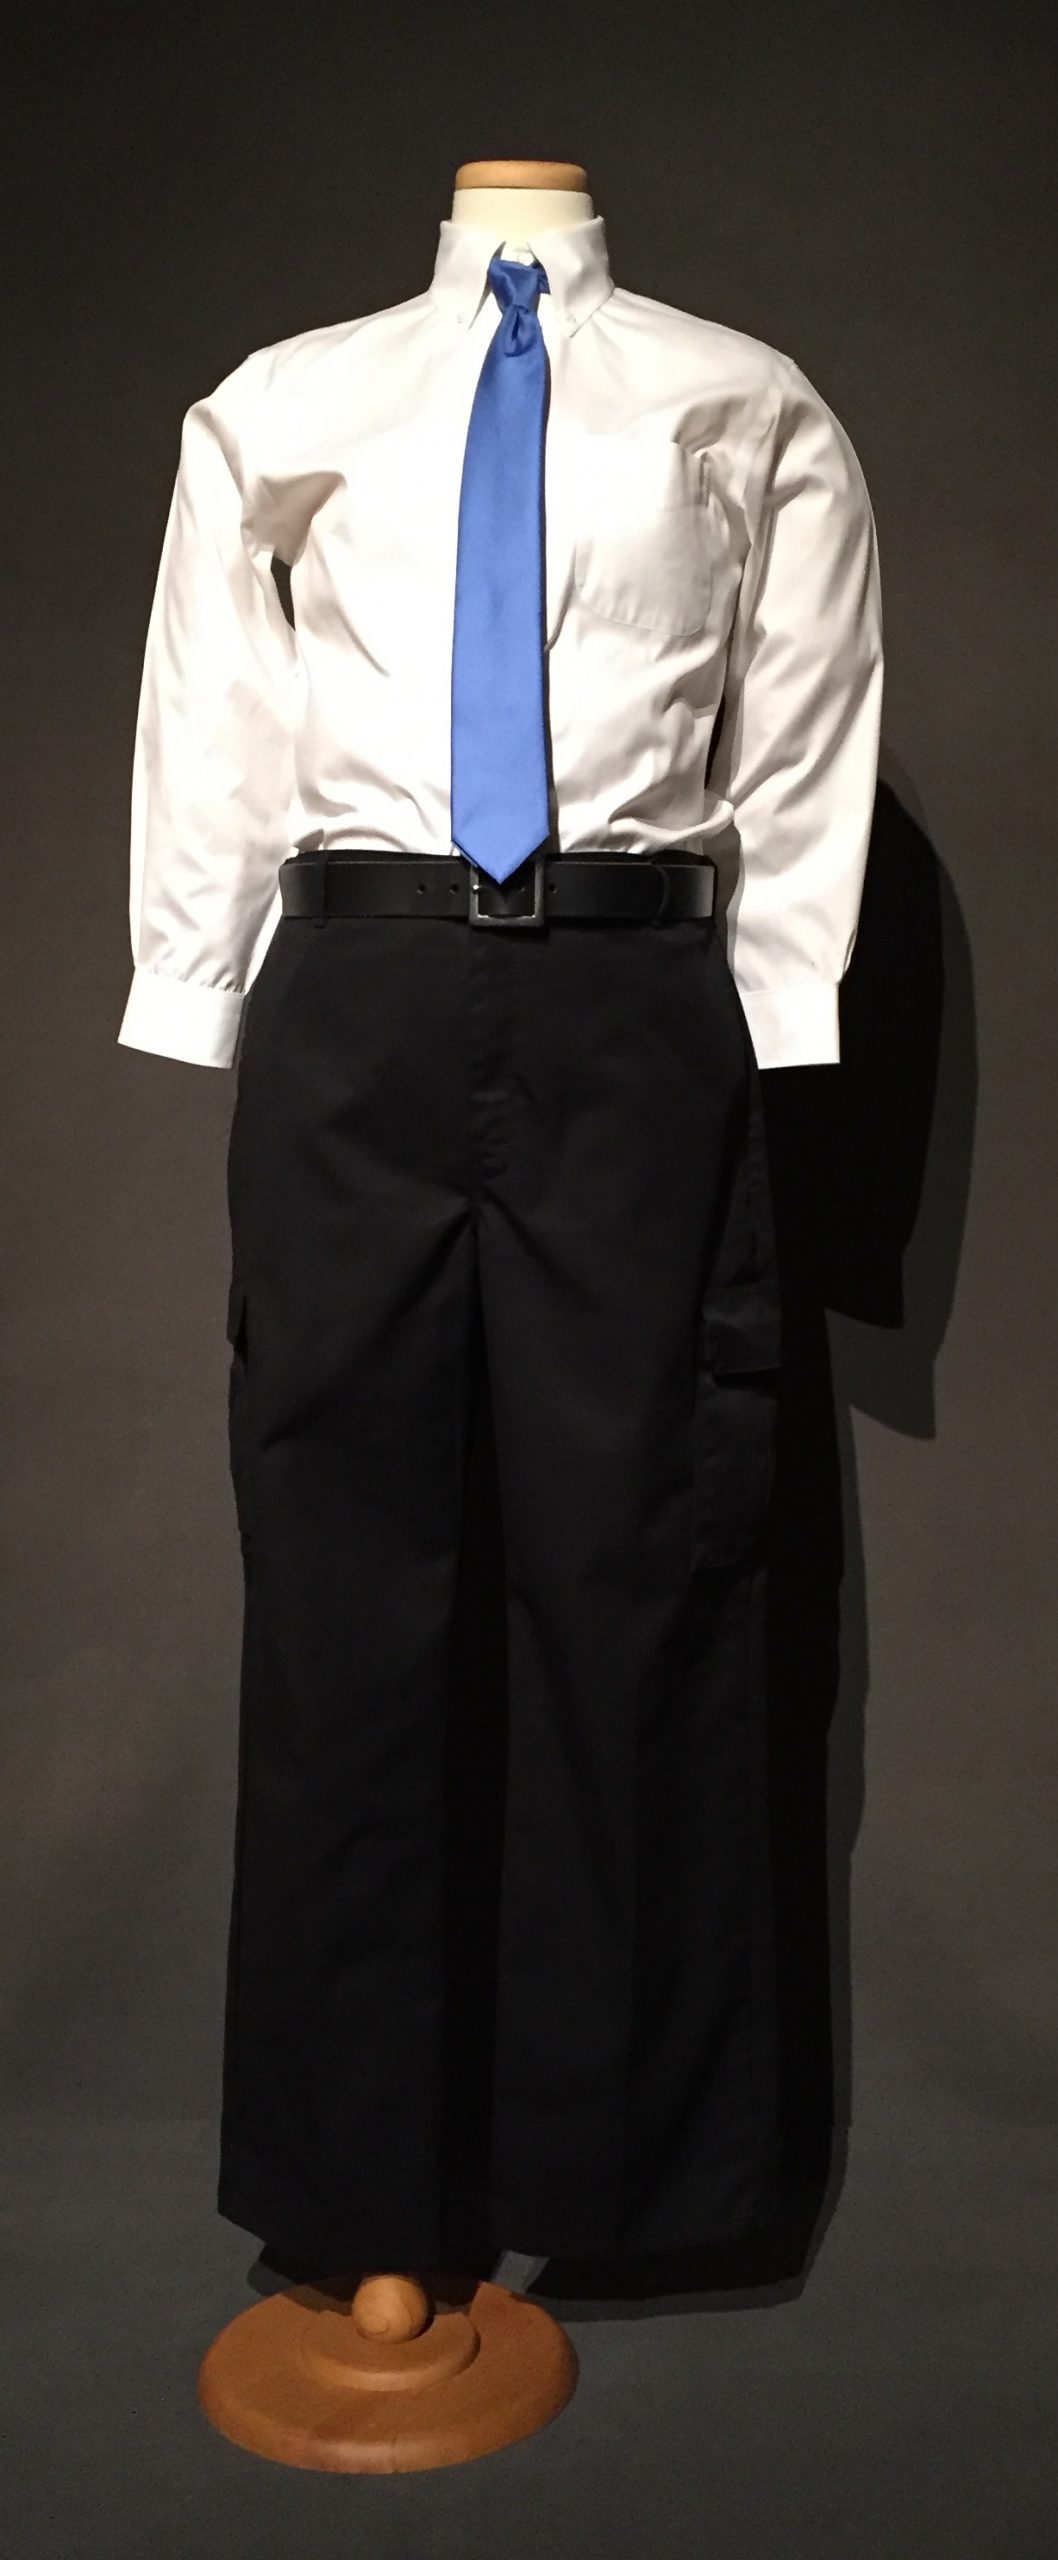 White button down, blue tie, blue dress cargo pant